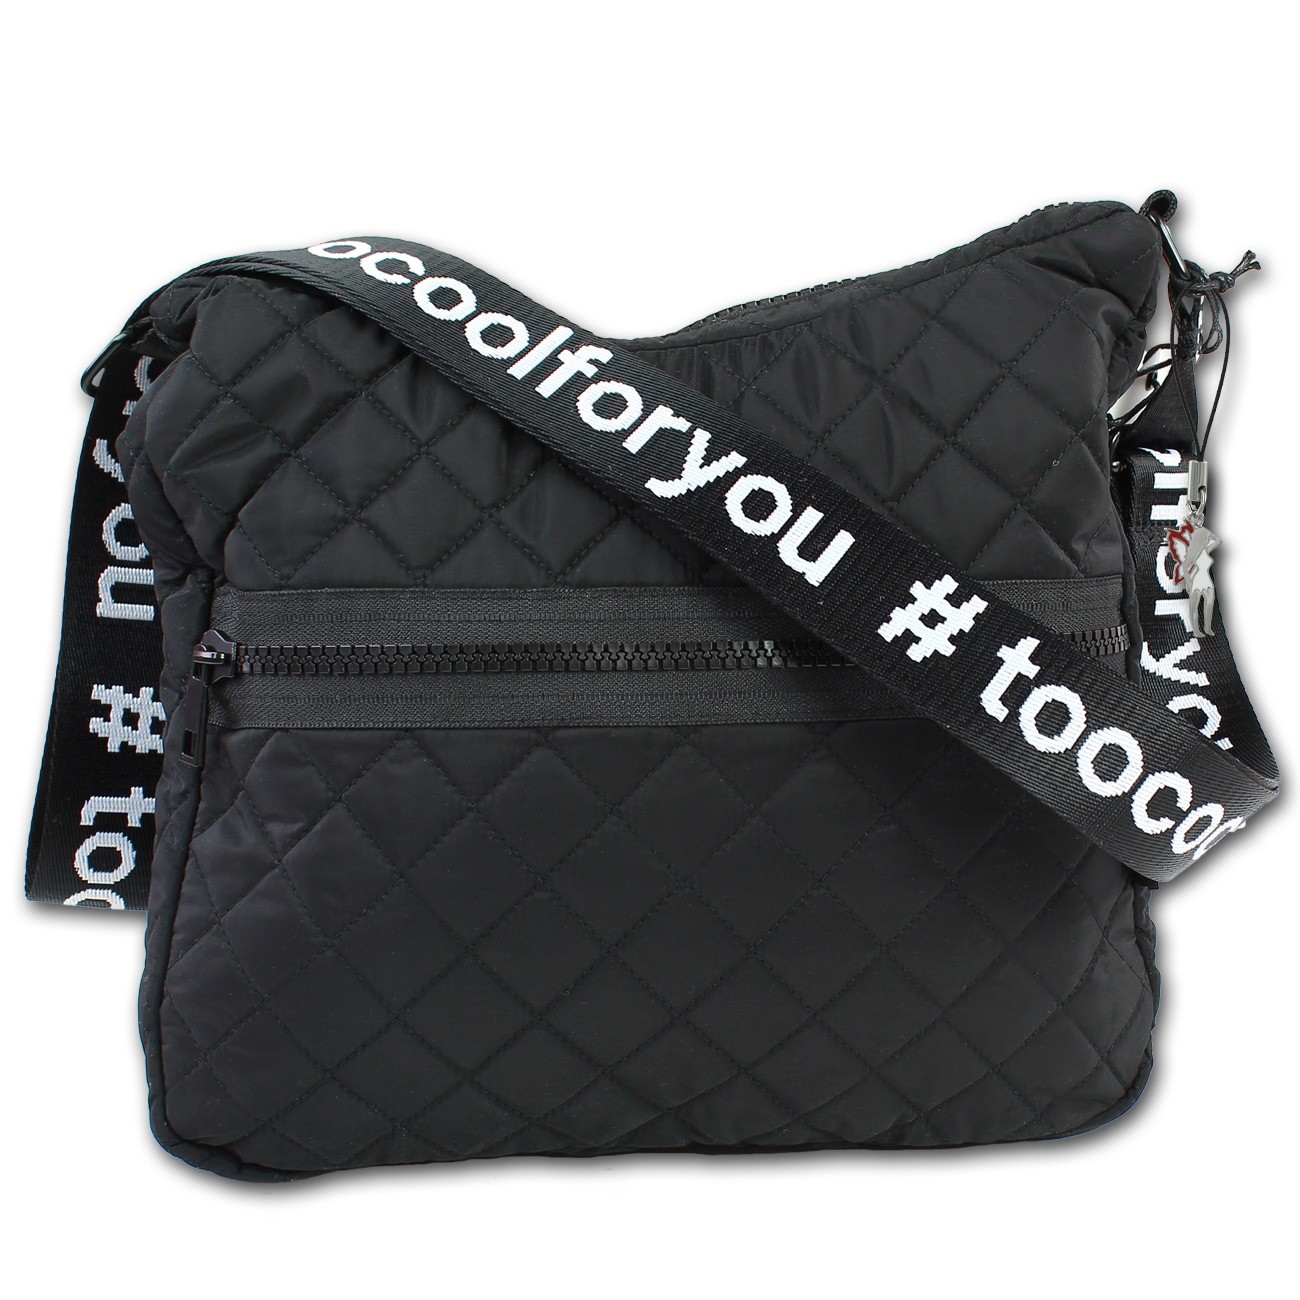 New Bags gesteppte Bellevory Sport Schultertasche schwarz Umhängetasche OTD2211S